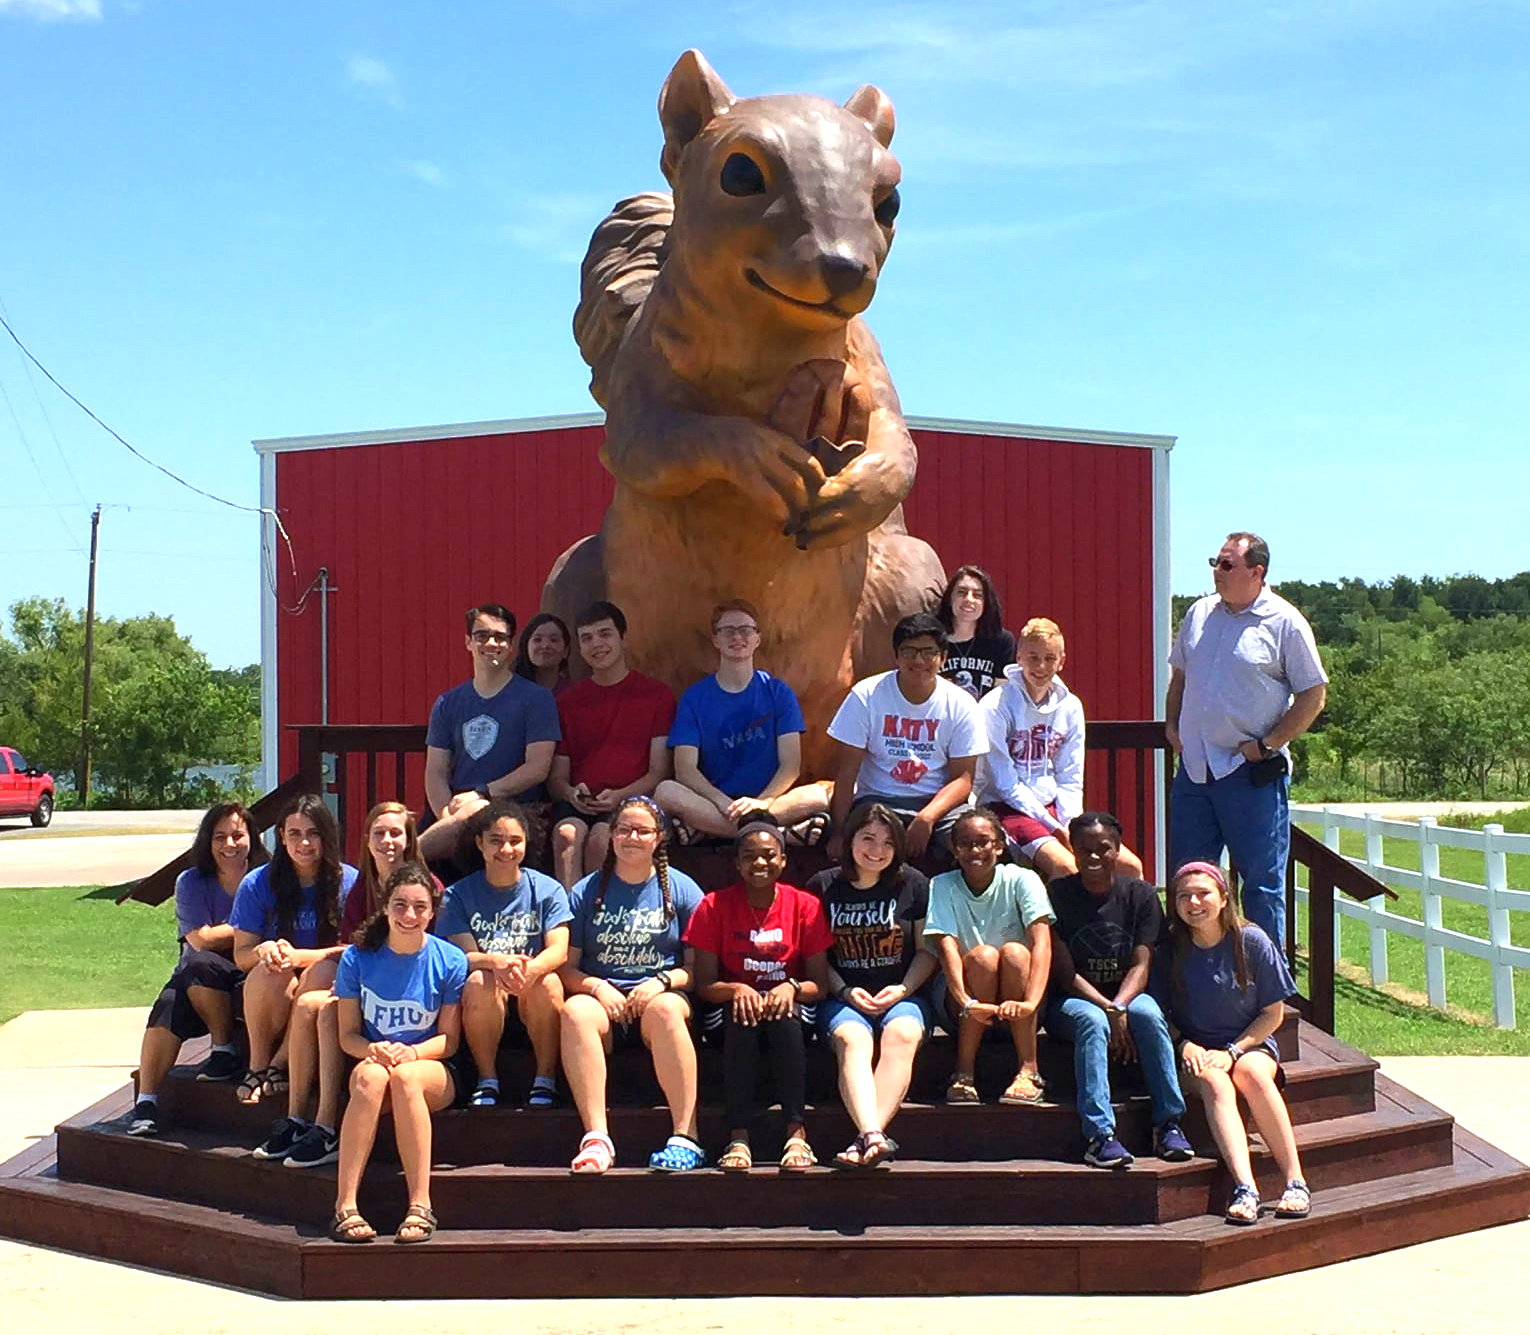 World's largest squirrel sculpture: Cedar Creek, Texas, sets world record